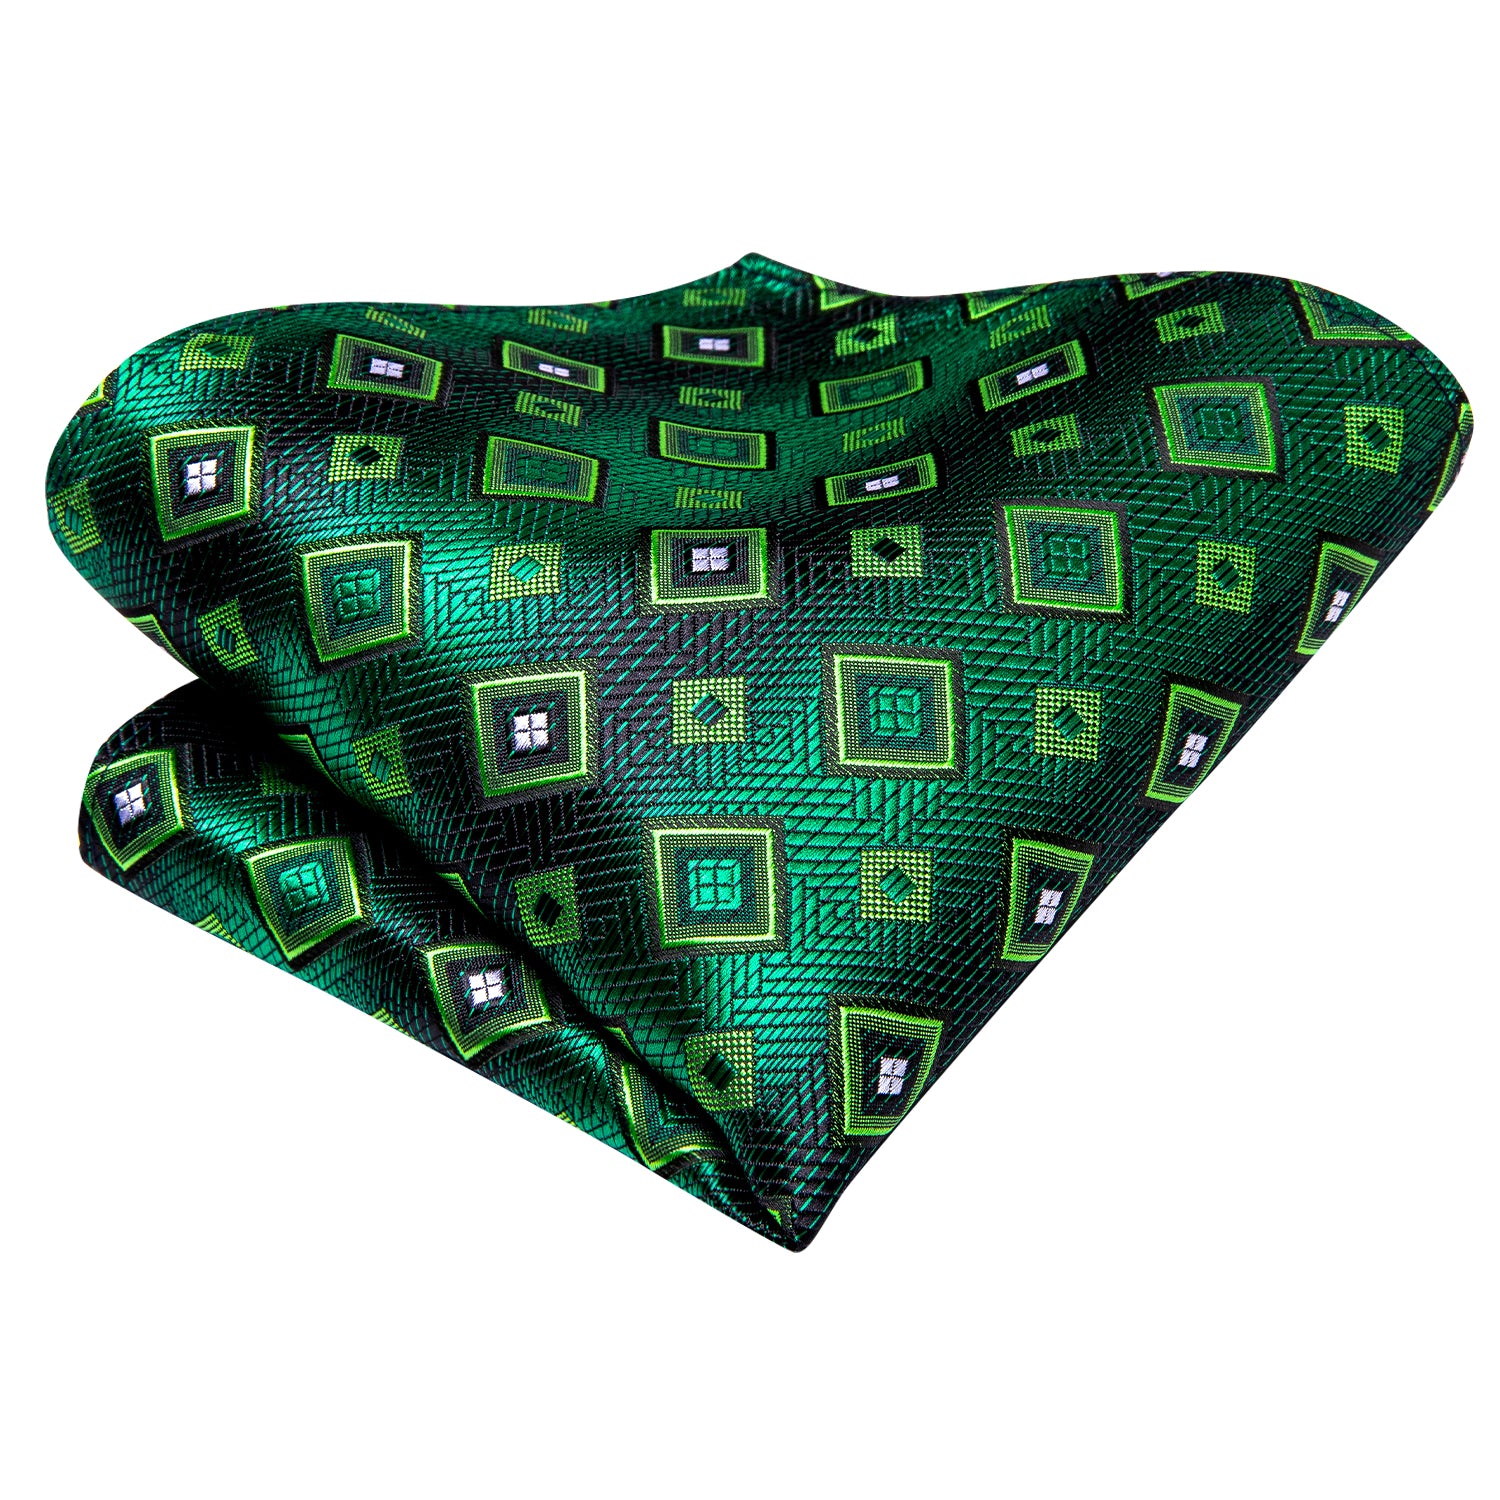 Green Plaid Novelty Tie Pocket Square Cufflinks Set